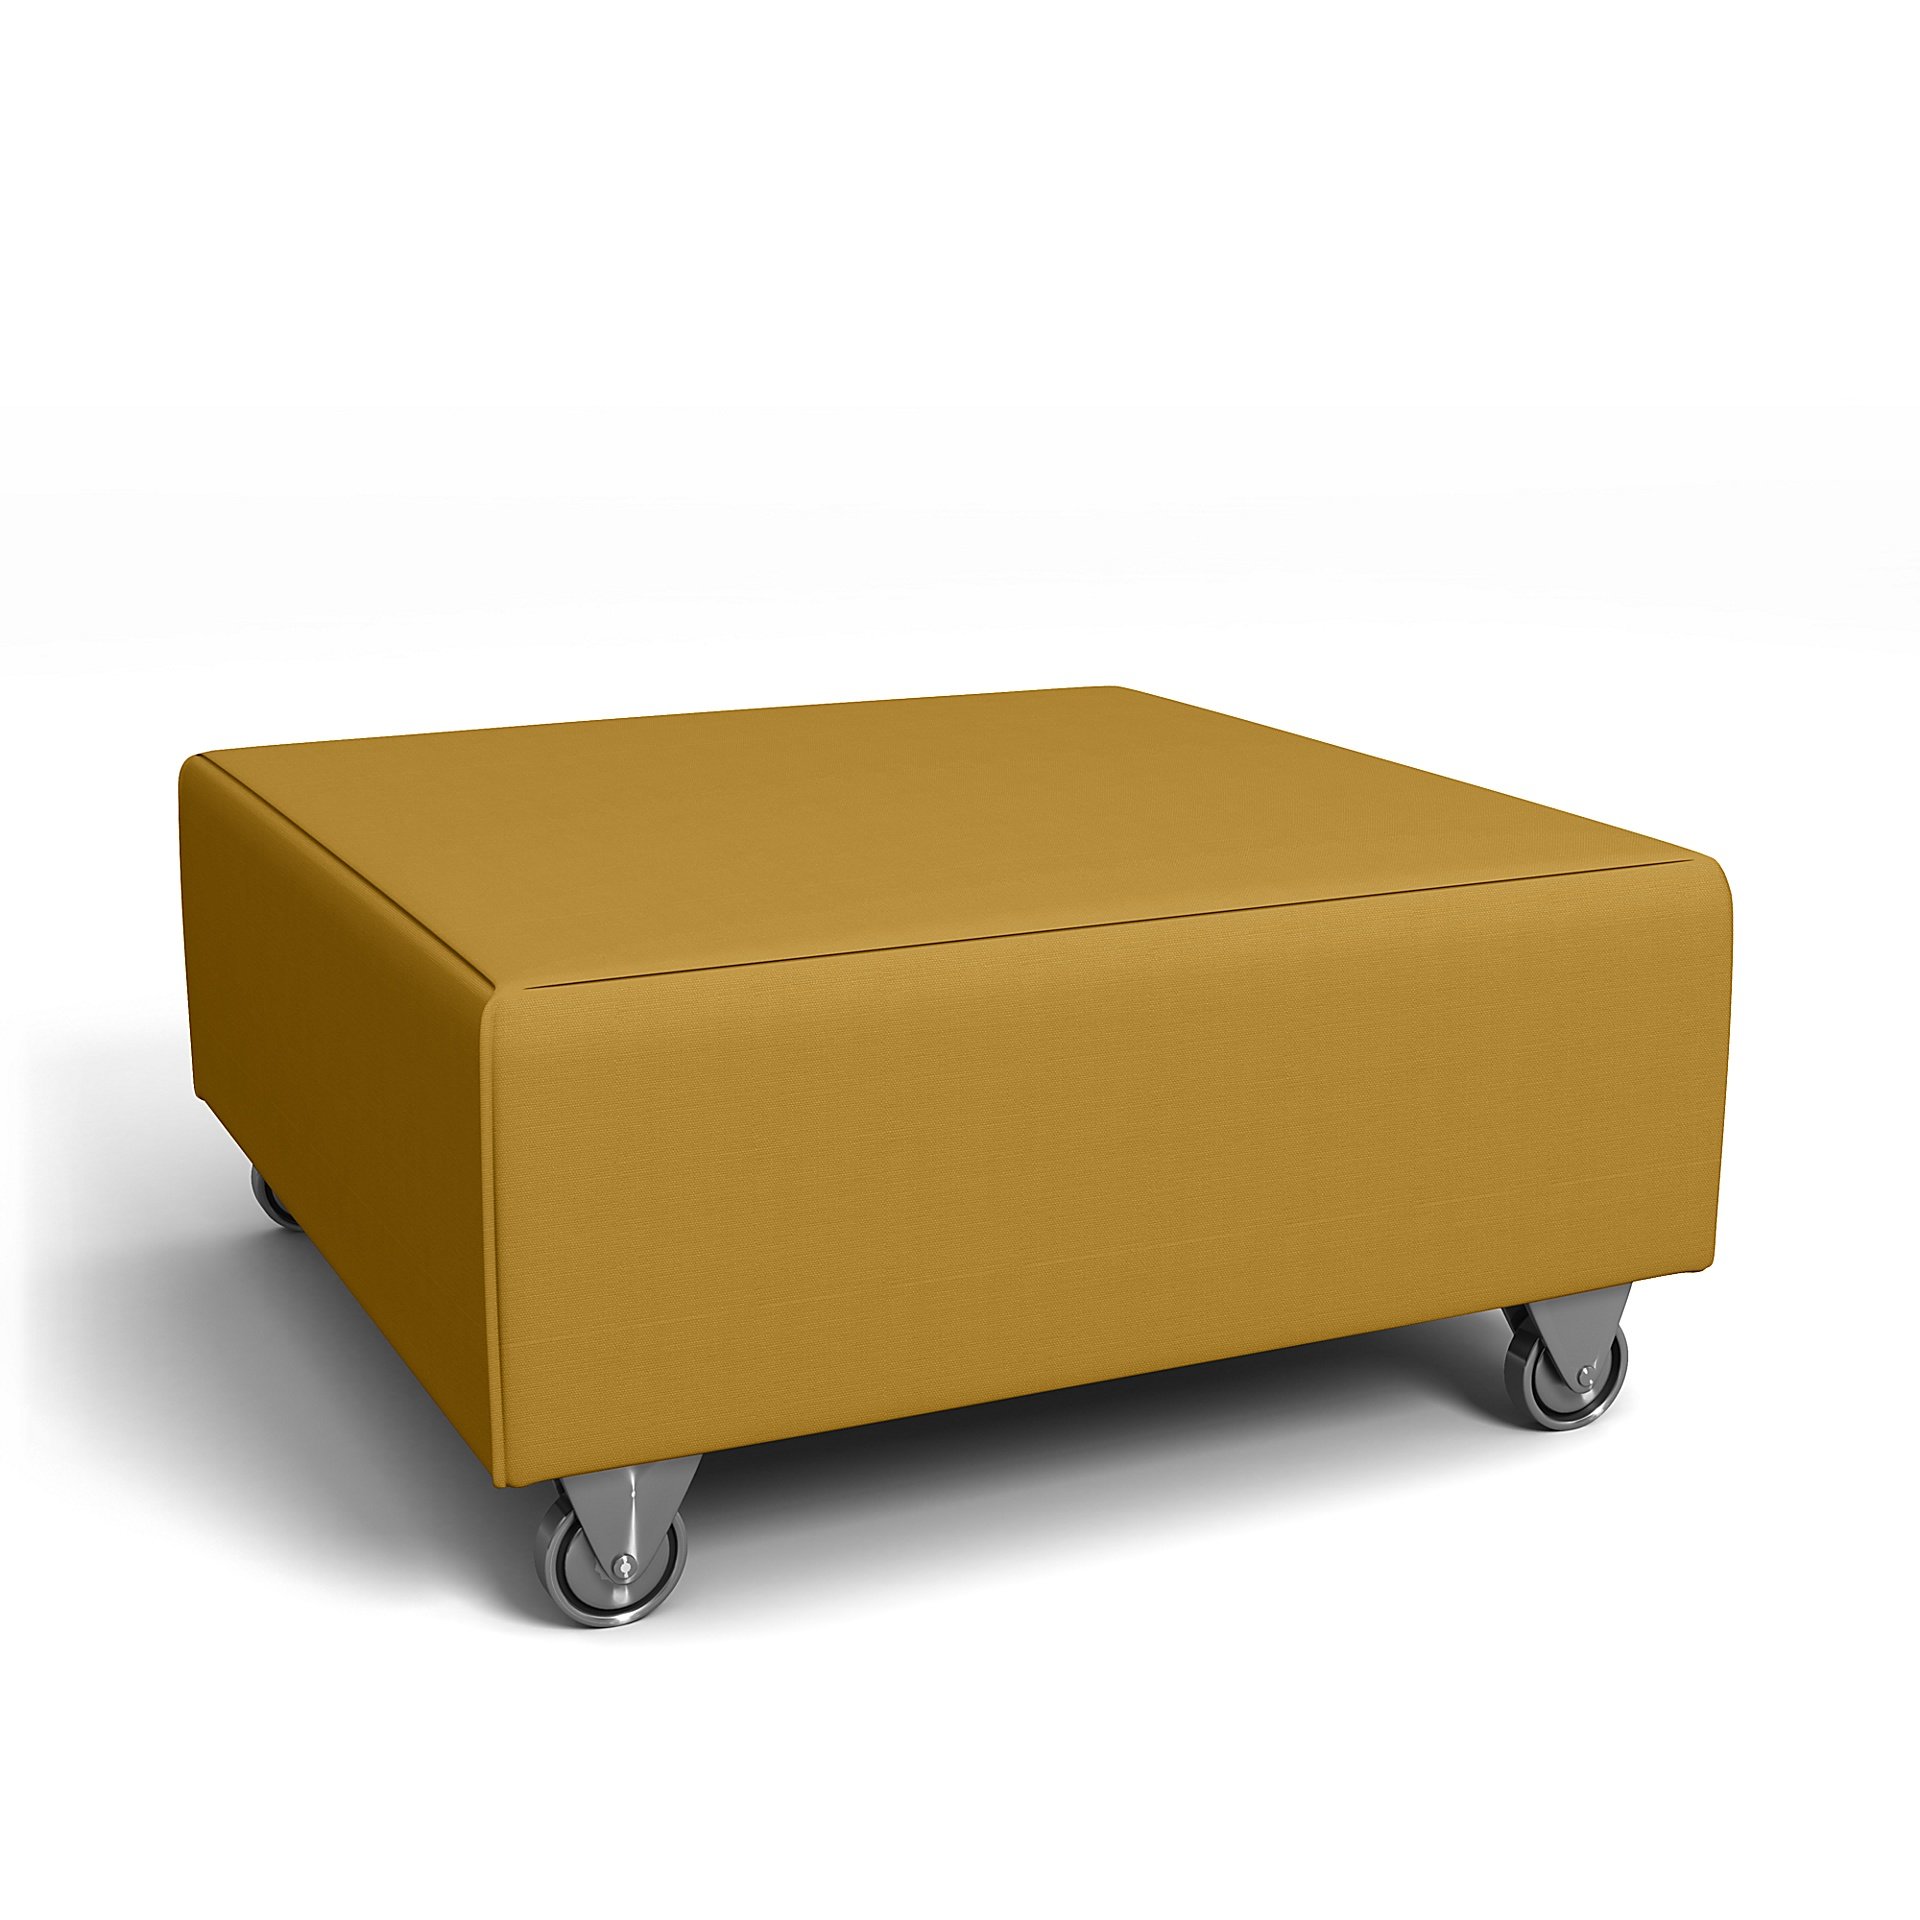 IKEA - Falsterbo Footstool Cover, Honey Mustard, Cotton - Bemz